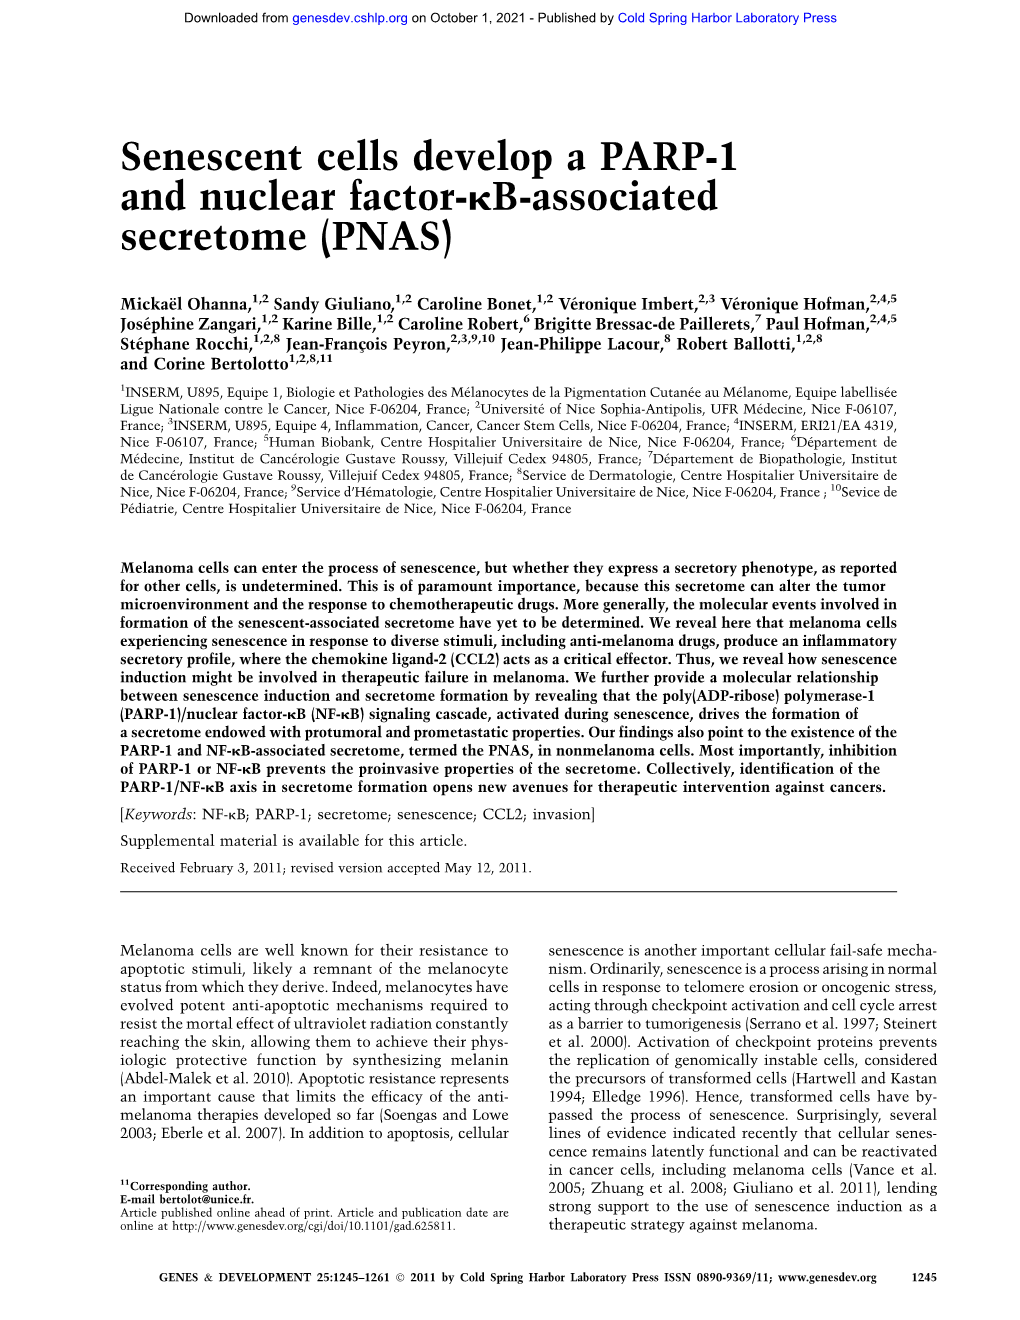 Senescent Cells Develop a PARP-1 and Nuclear Factor-Kb-Associated Secretome (PNAS)